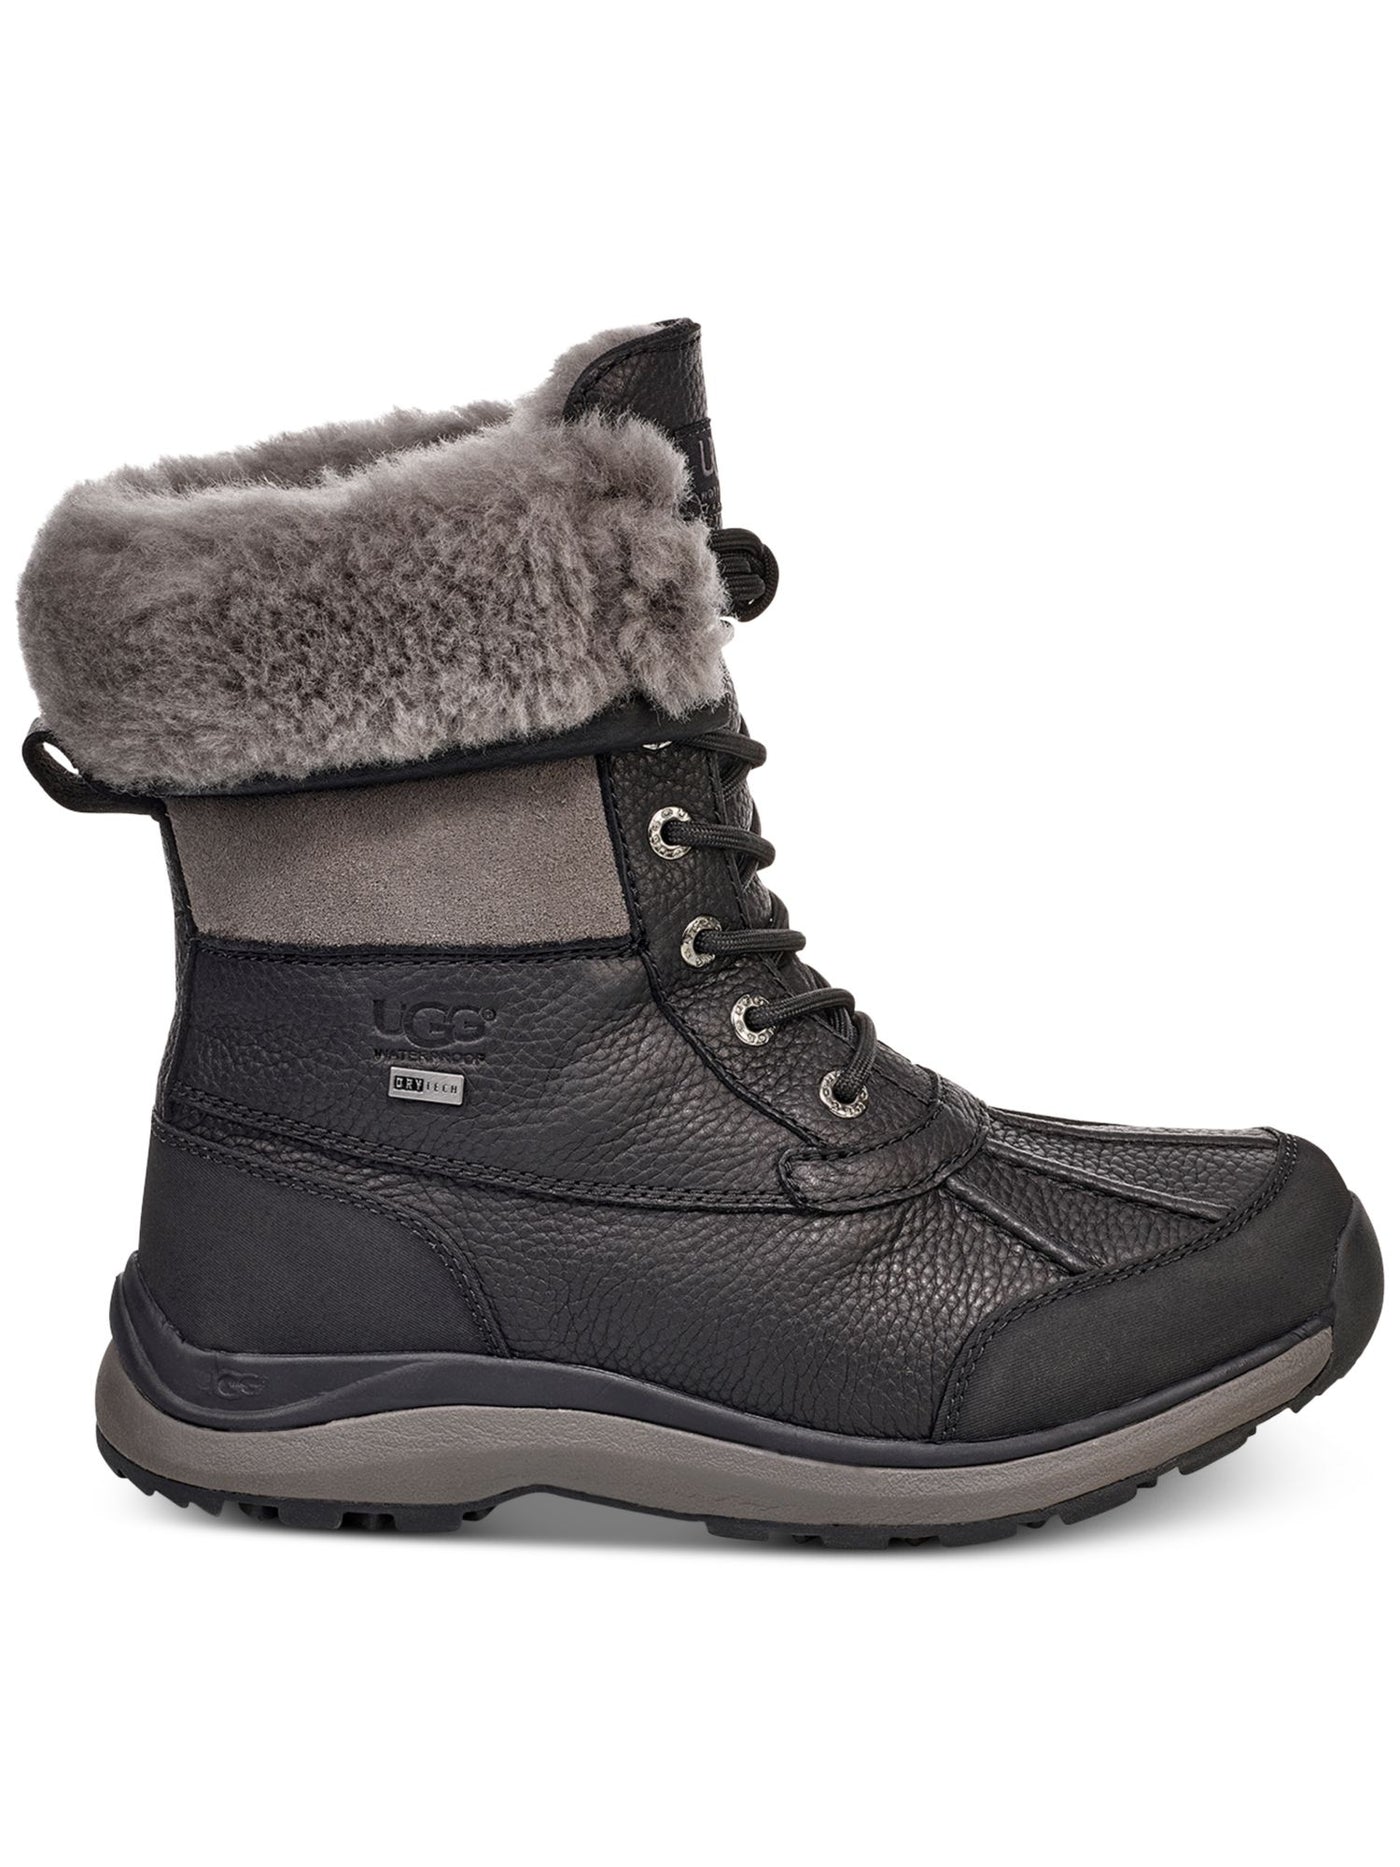 UGG Womens Black Padded Waterproof Adirondack Iii Round Toe Lace-Up Leather Winter Boots 5